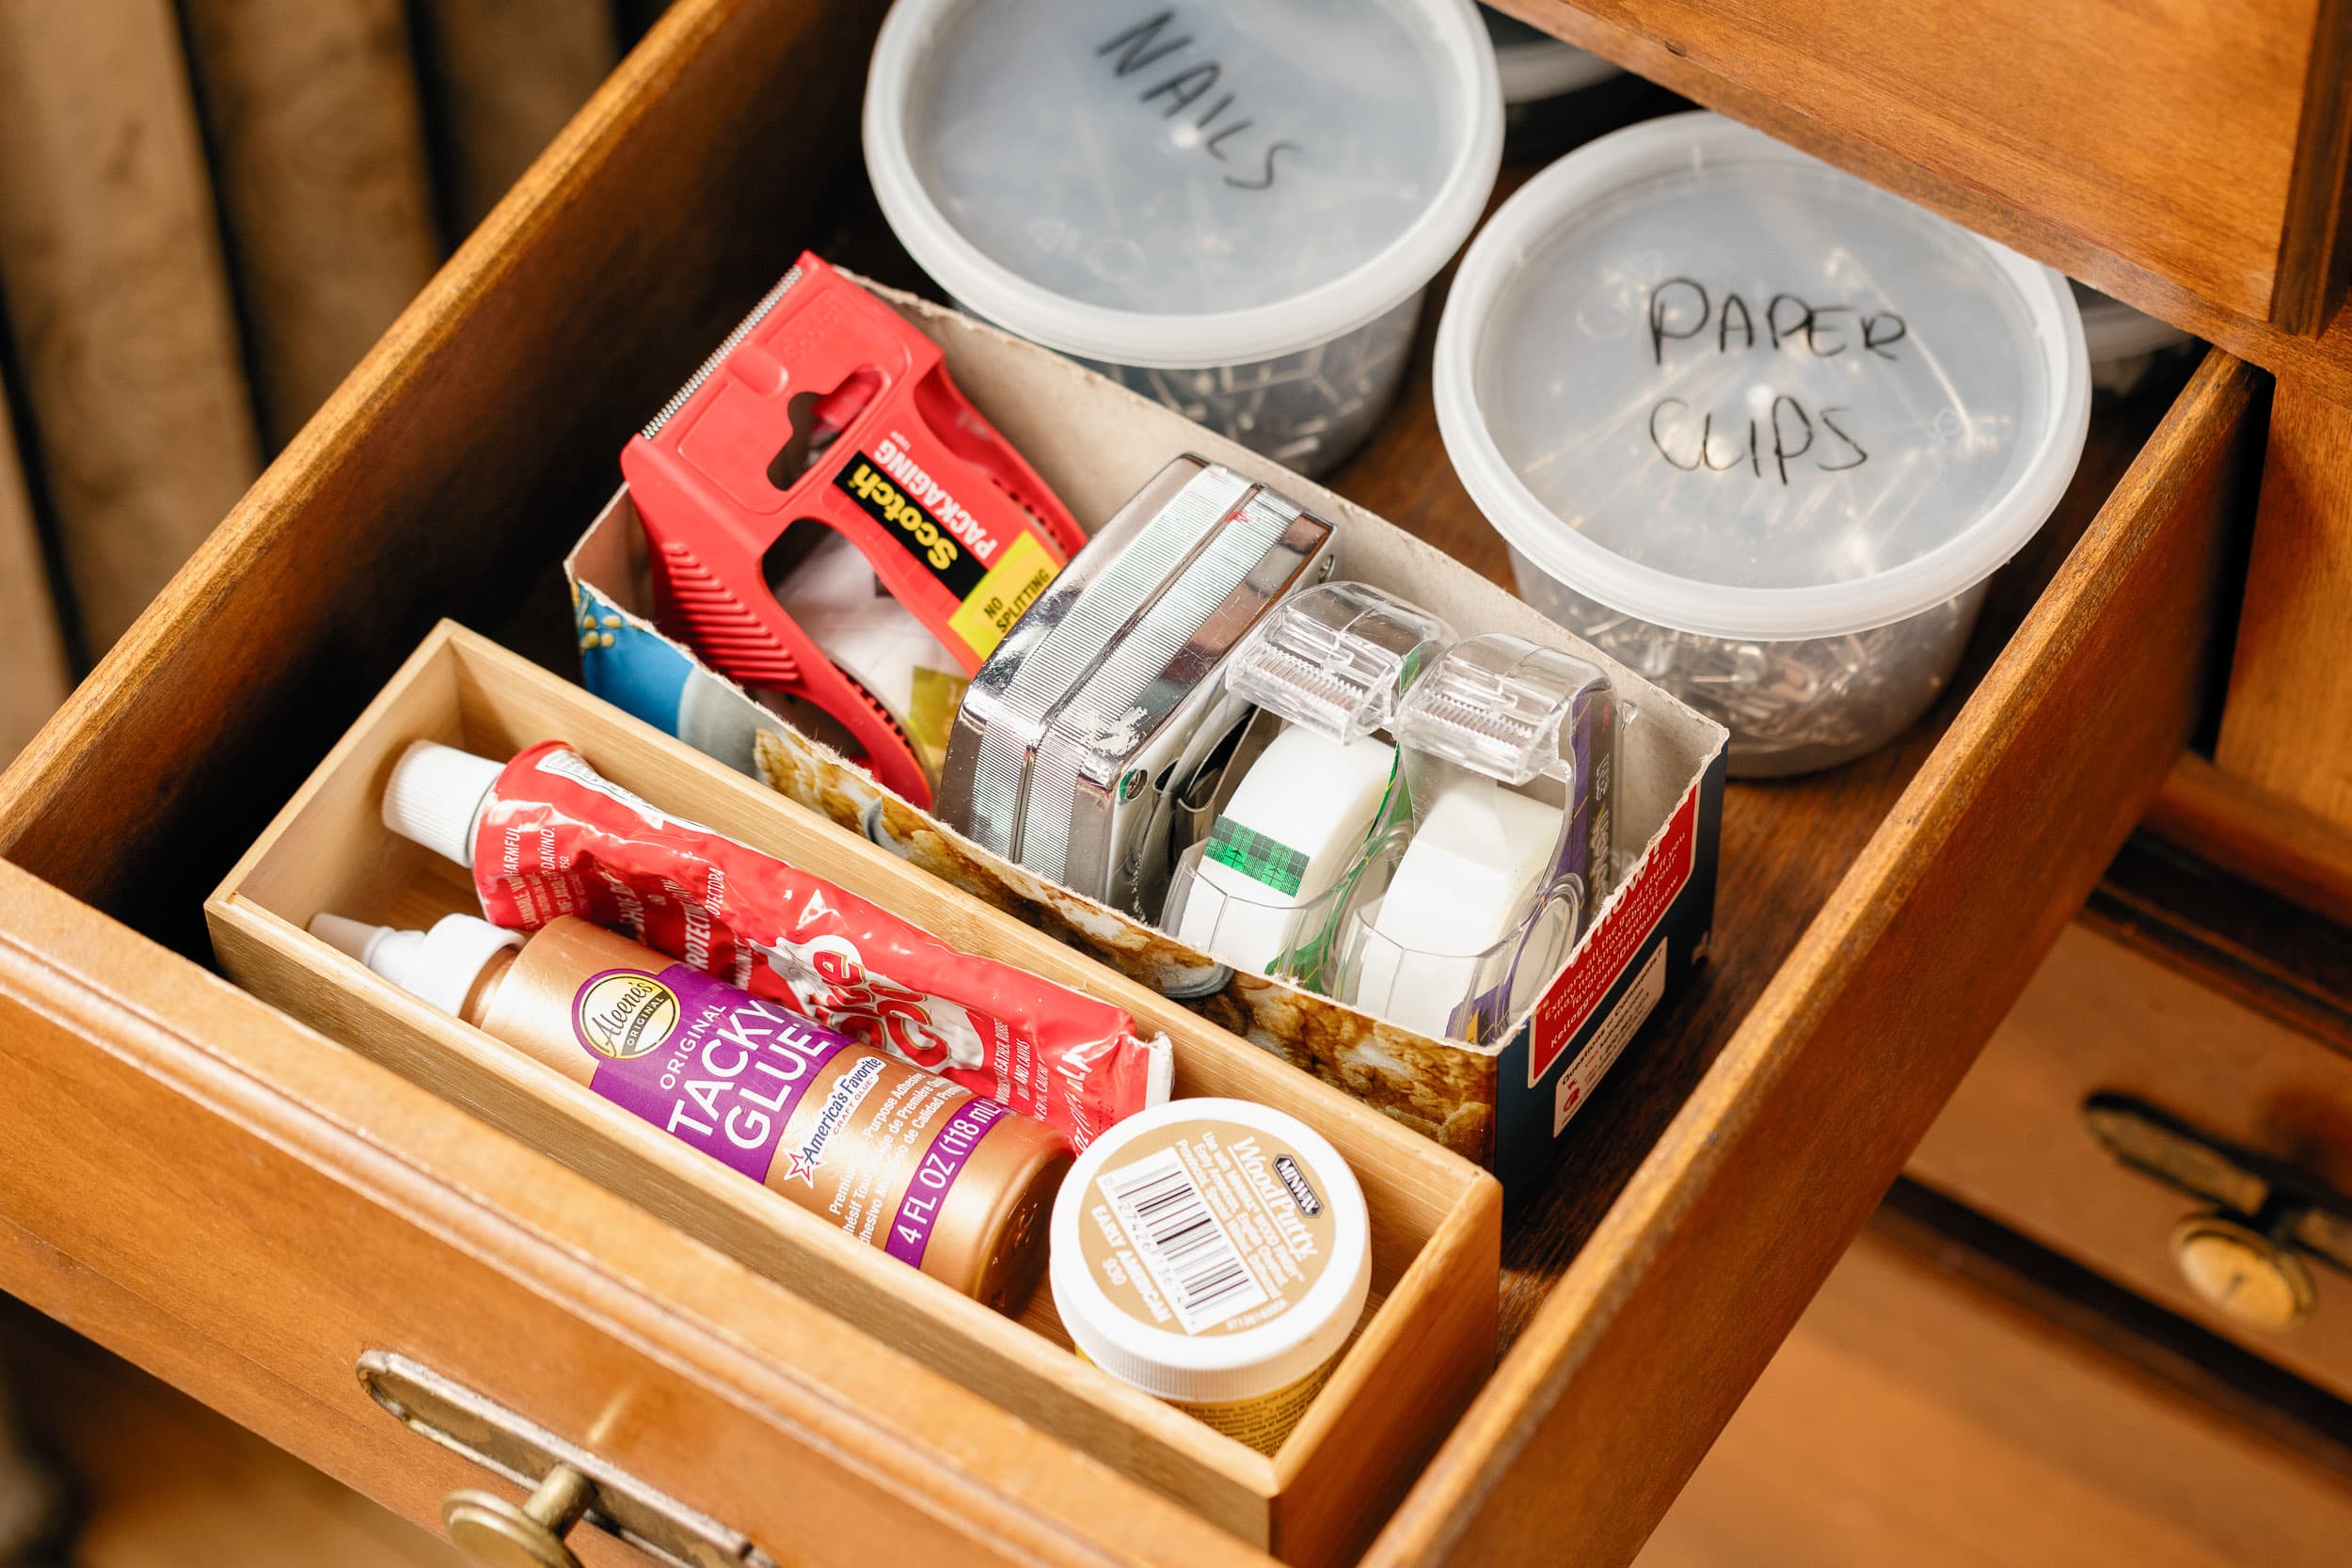 15 Brilliant Utensil Storage Ideas to Keep Your Kitchen Organized